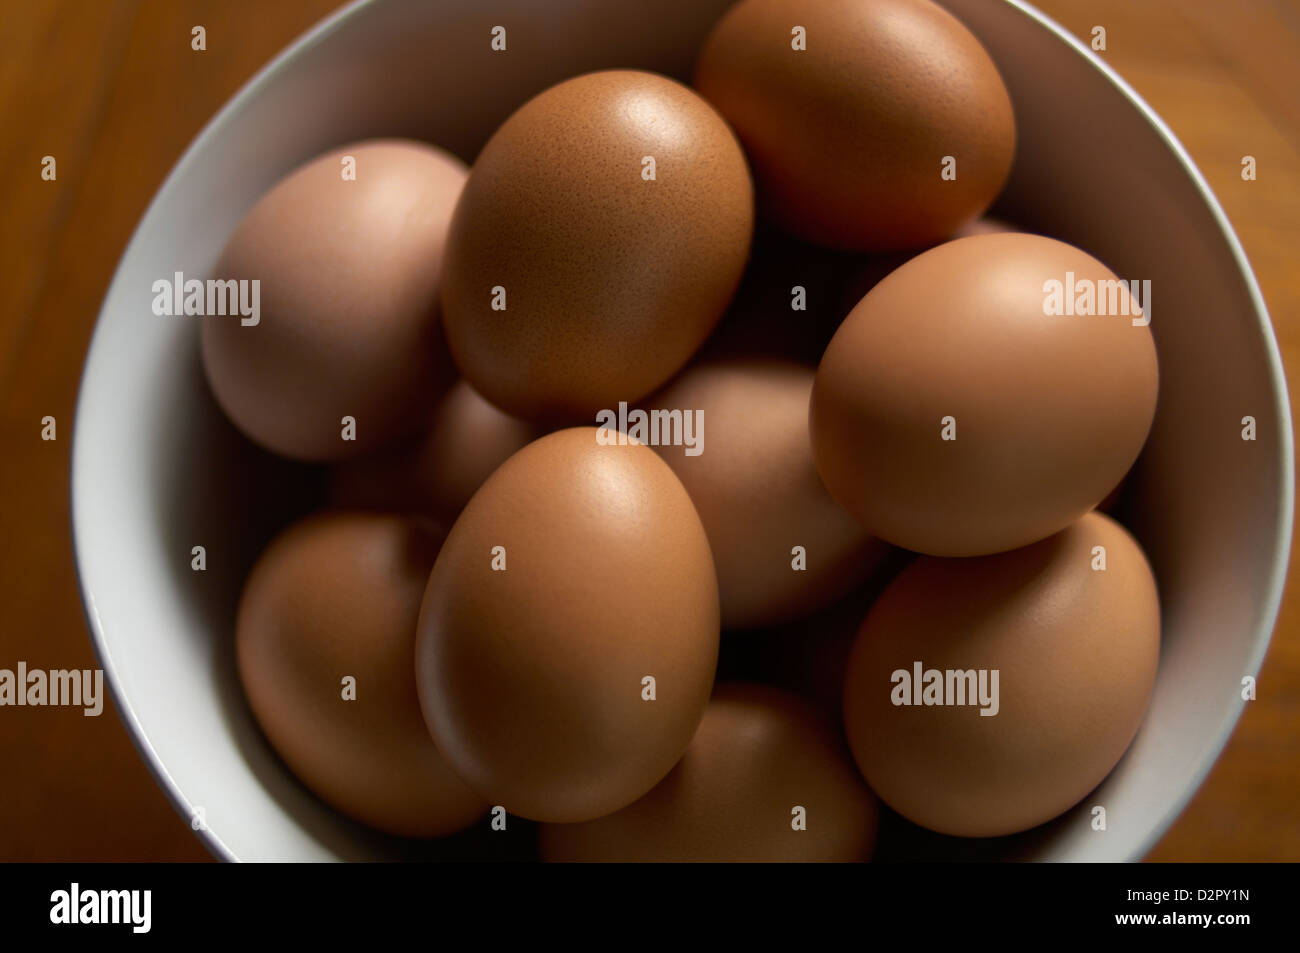 Tazón de huevos de gallinas free range fresco Foto de stock